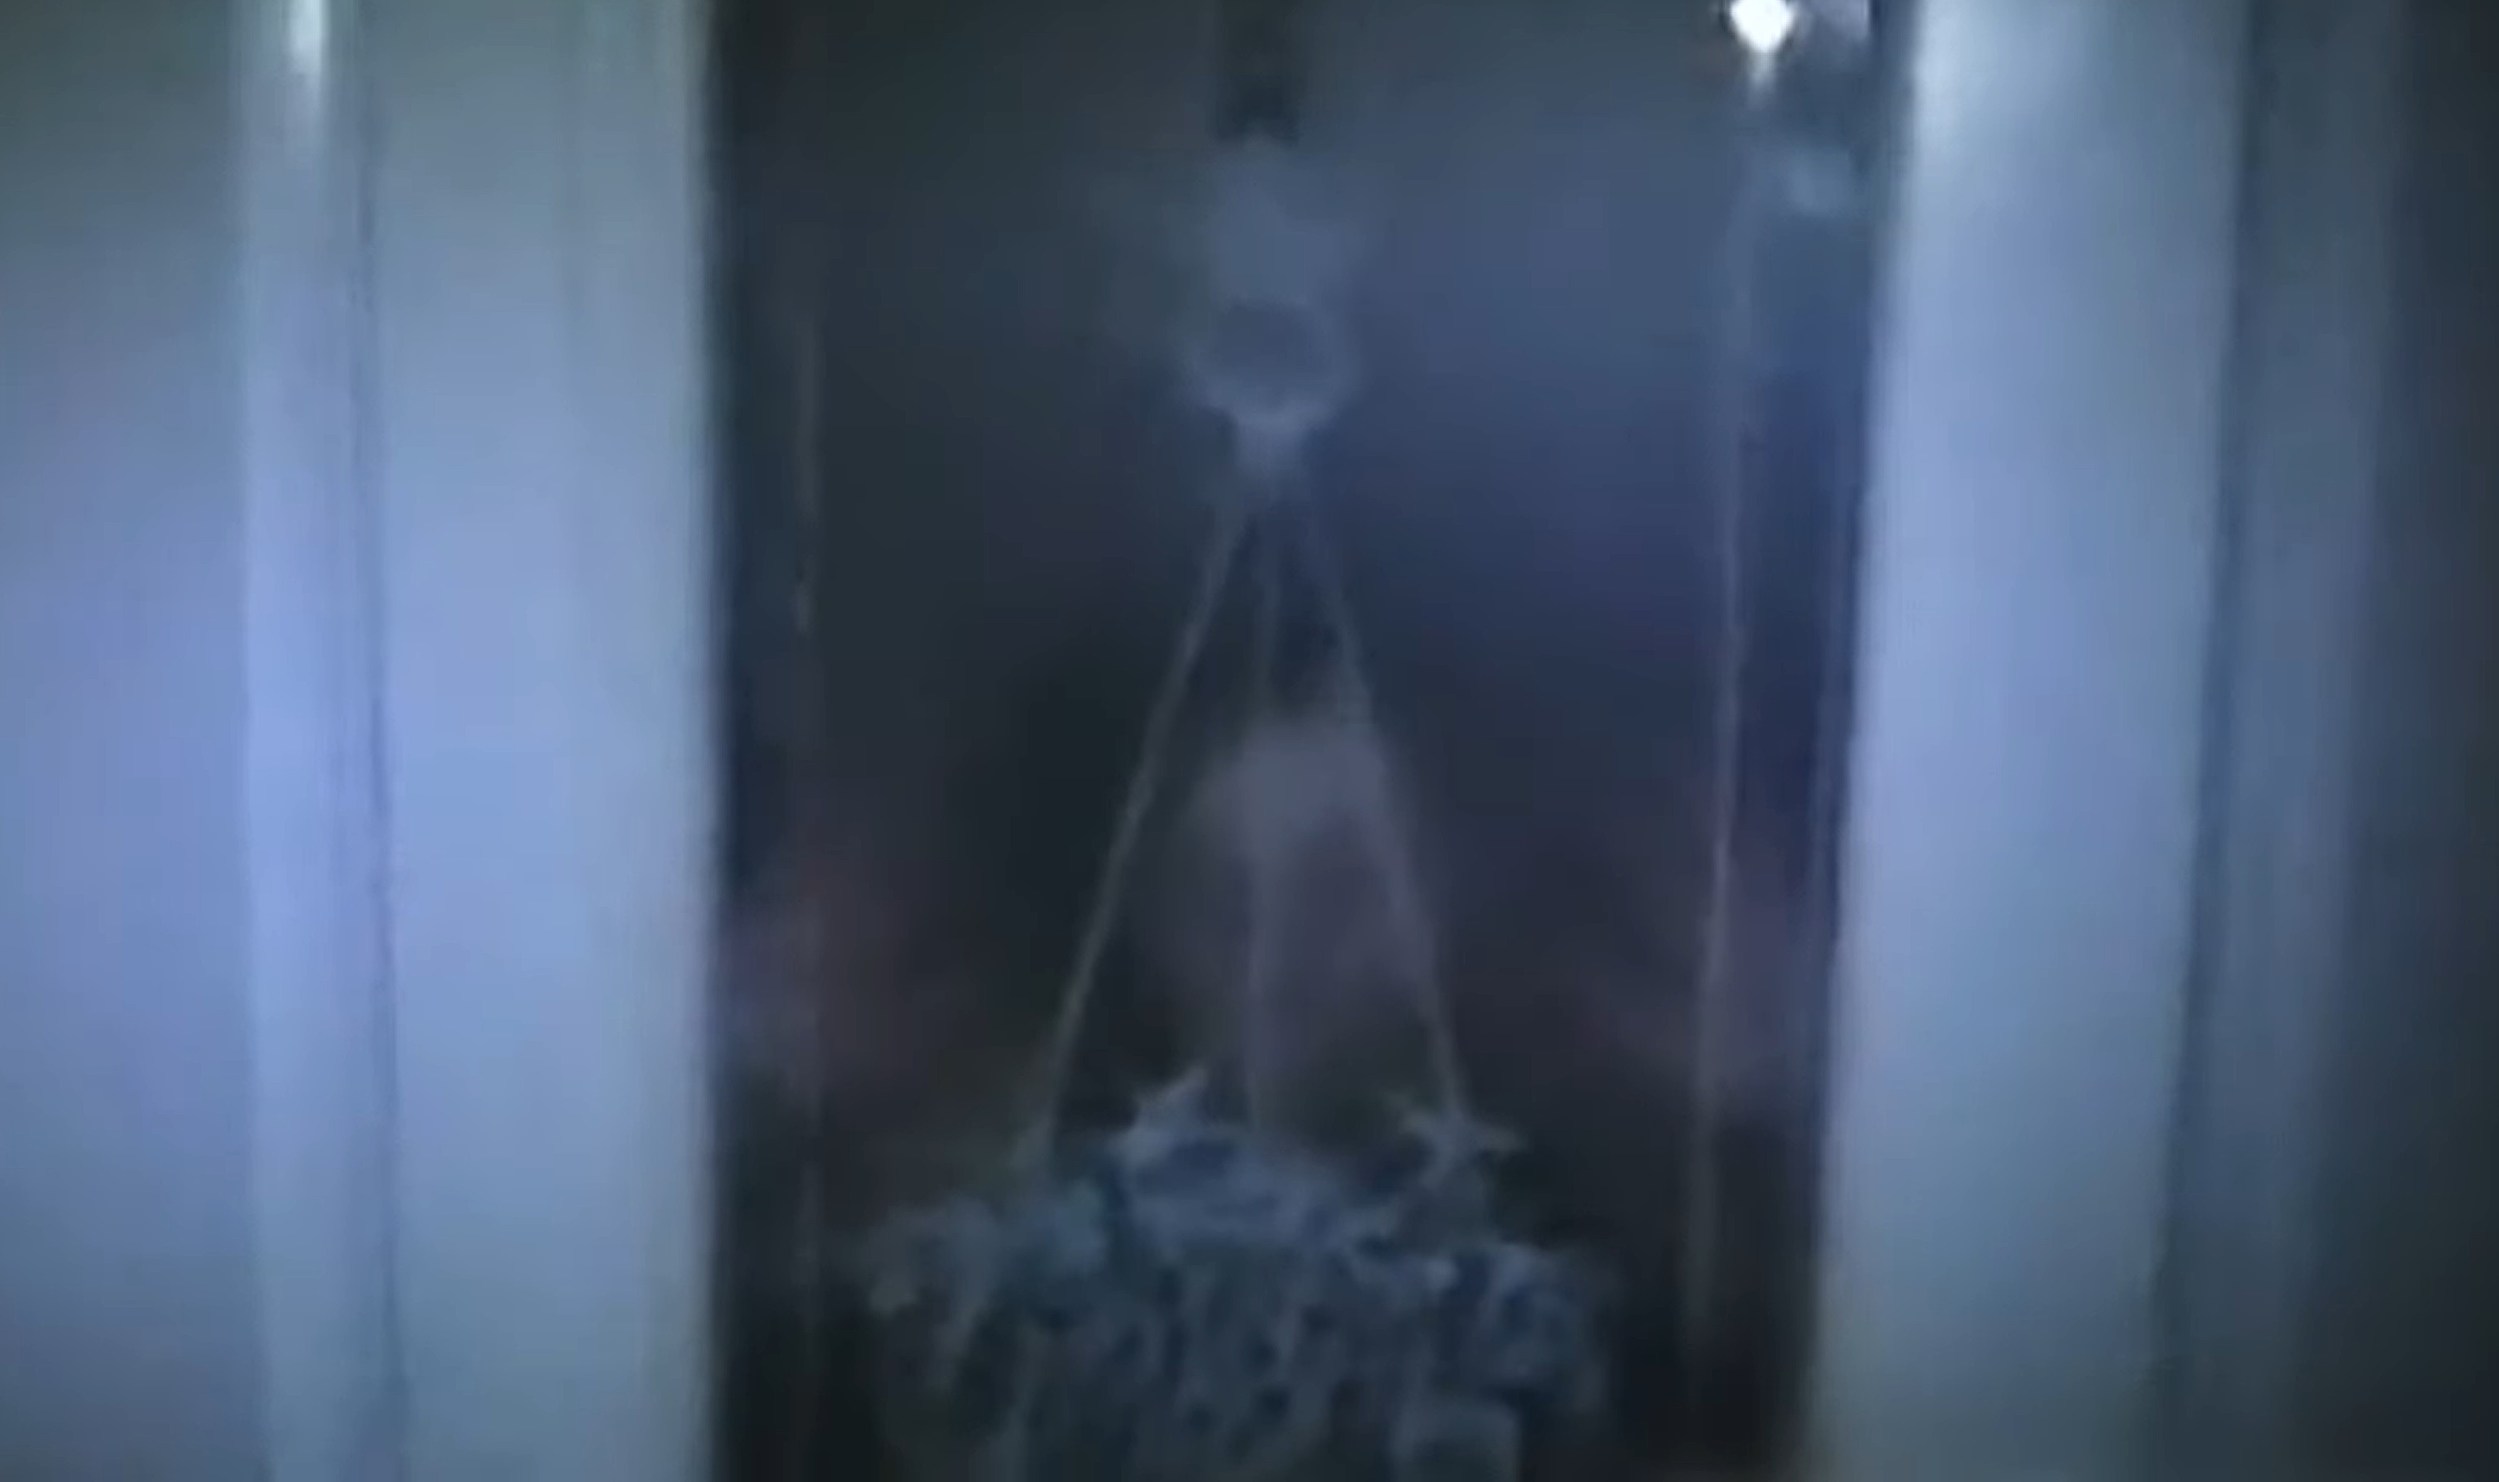 amateur apparition ghost video